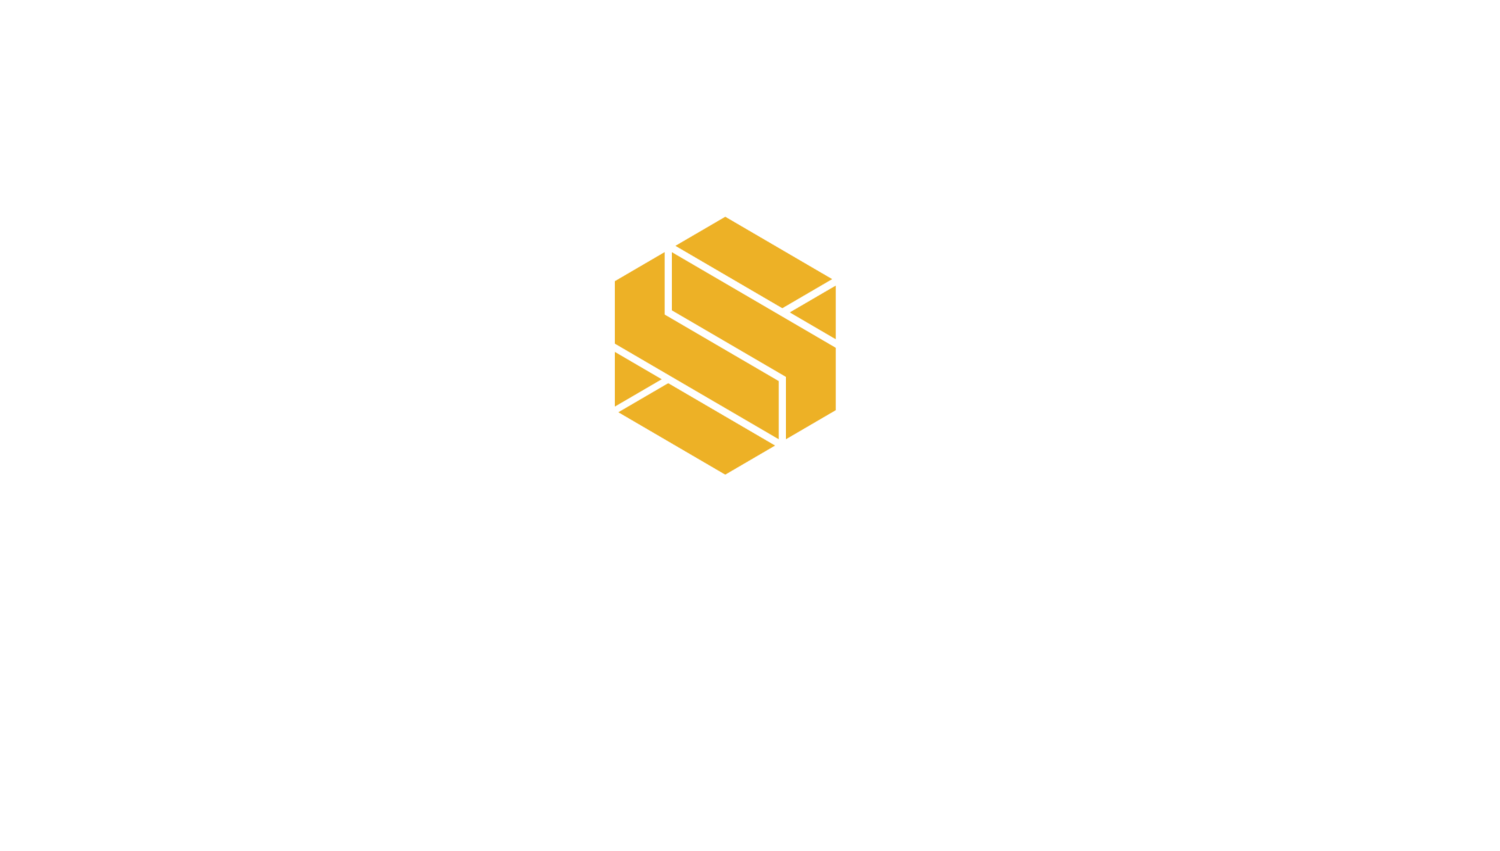 Site Investigation Supply